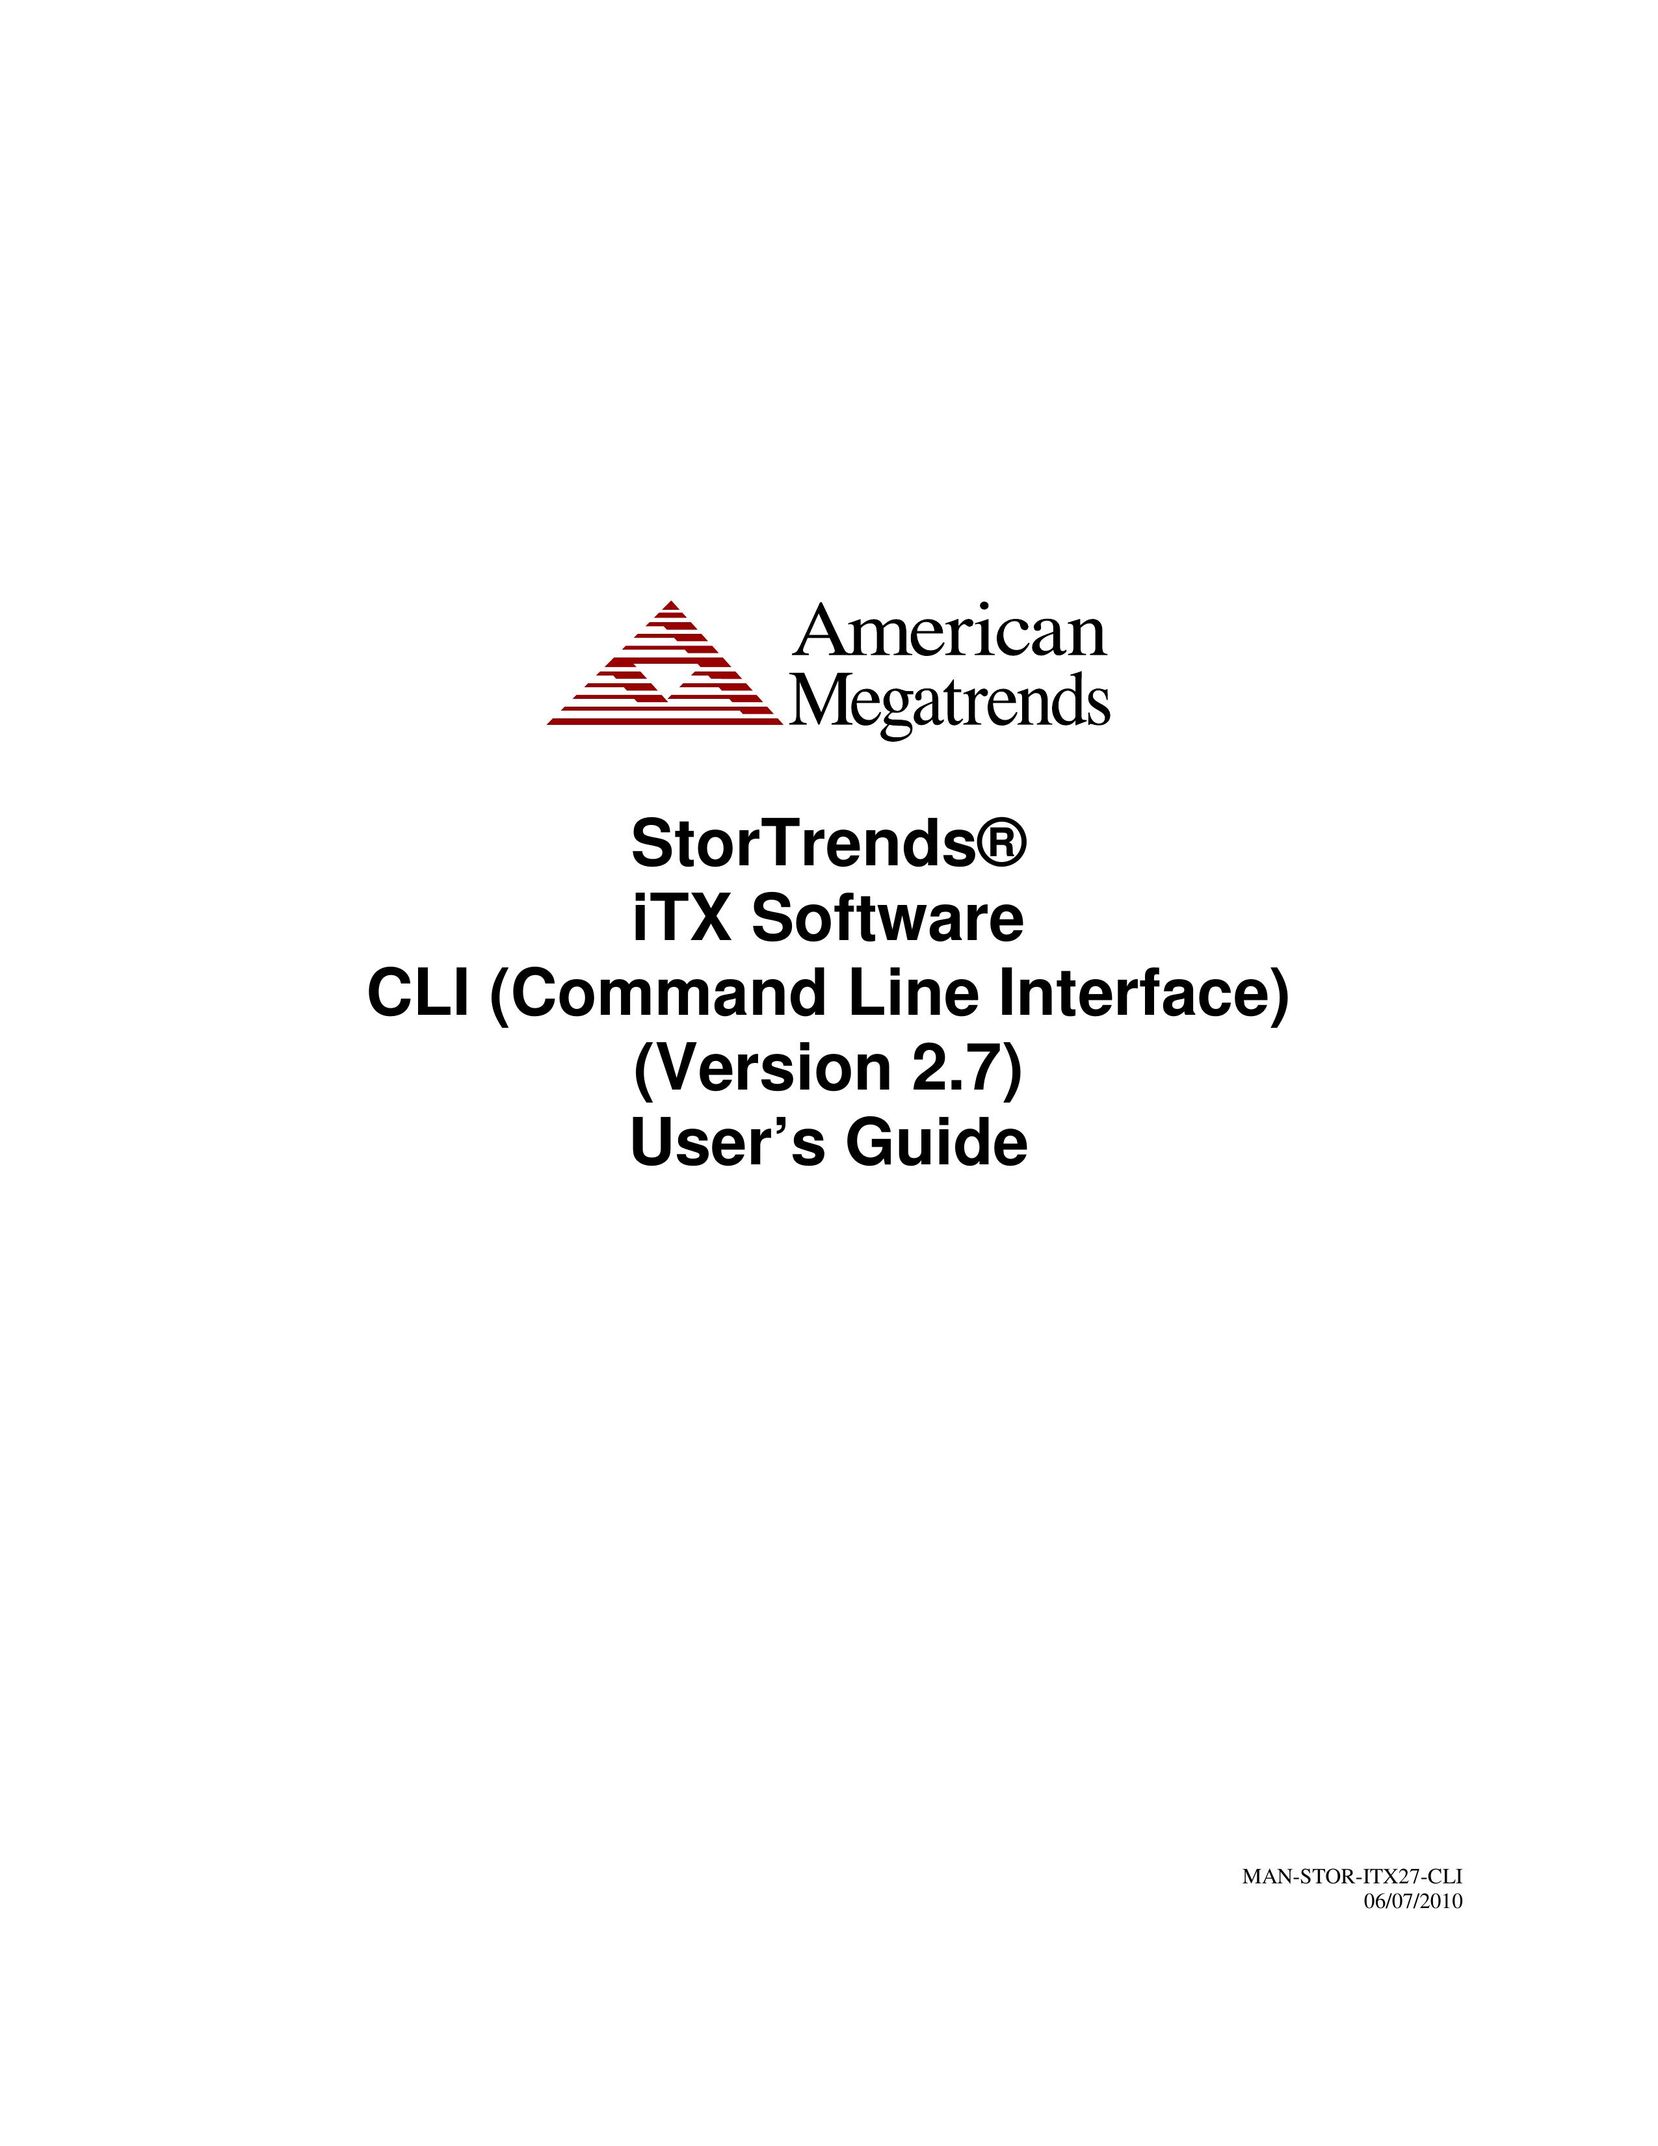 American Megatrends MAN-STOR-ITX27-CLI Network Card User Manual